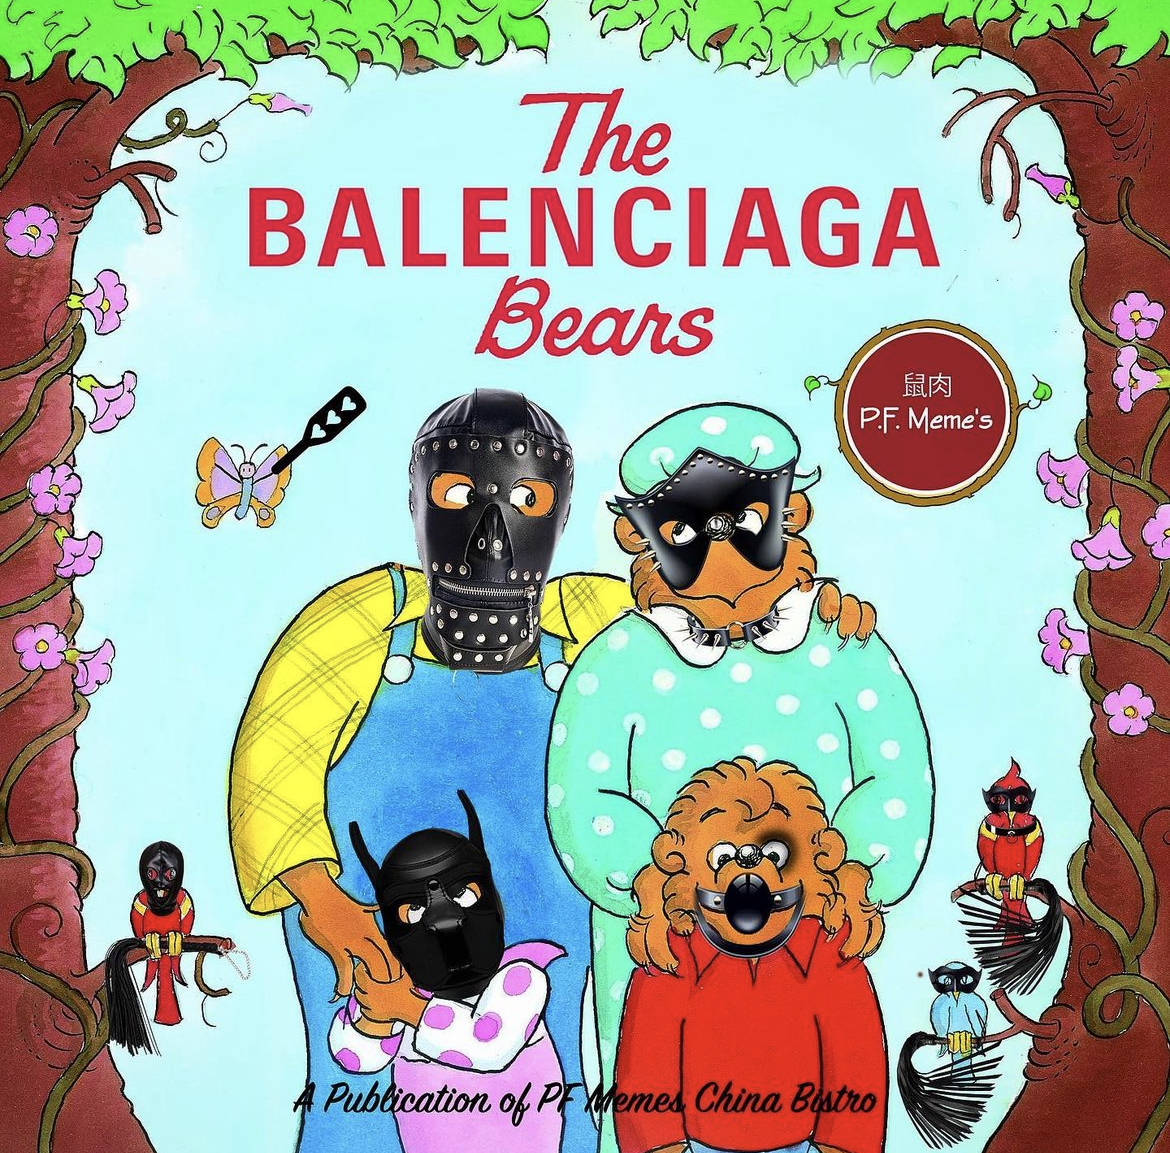 PFMemesChinaBistro Memes - pbs kids the berenstain bears - The Balenciaga Bears Ga P.F. Meme's 1 Publication of Pf Wemes China Bistro